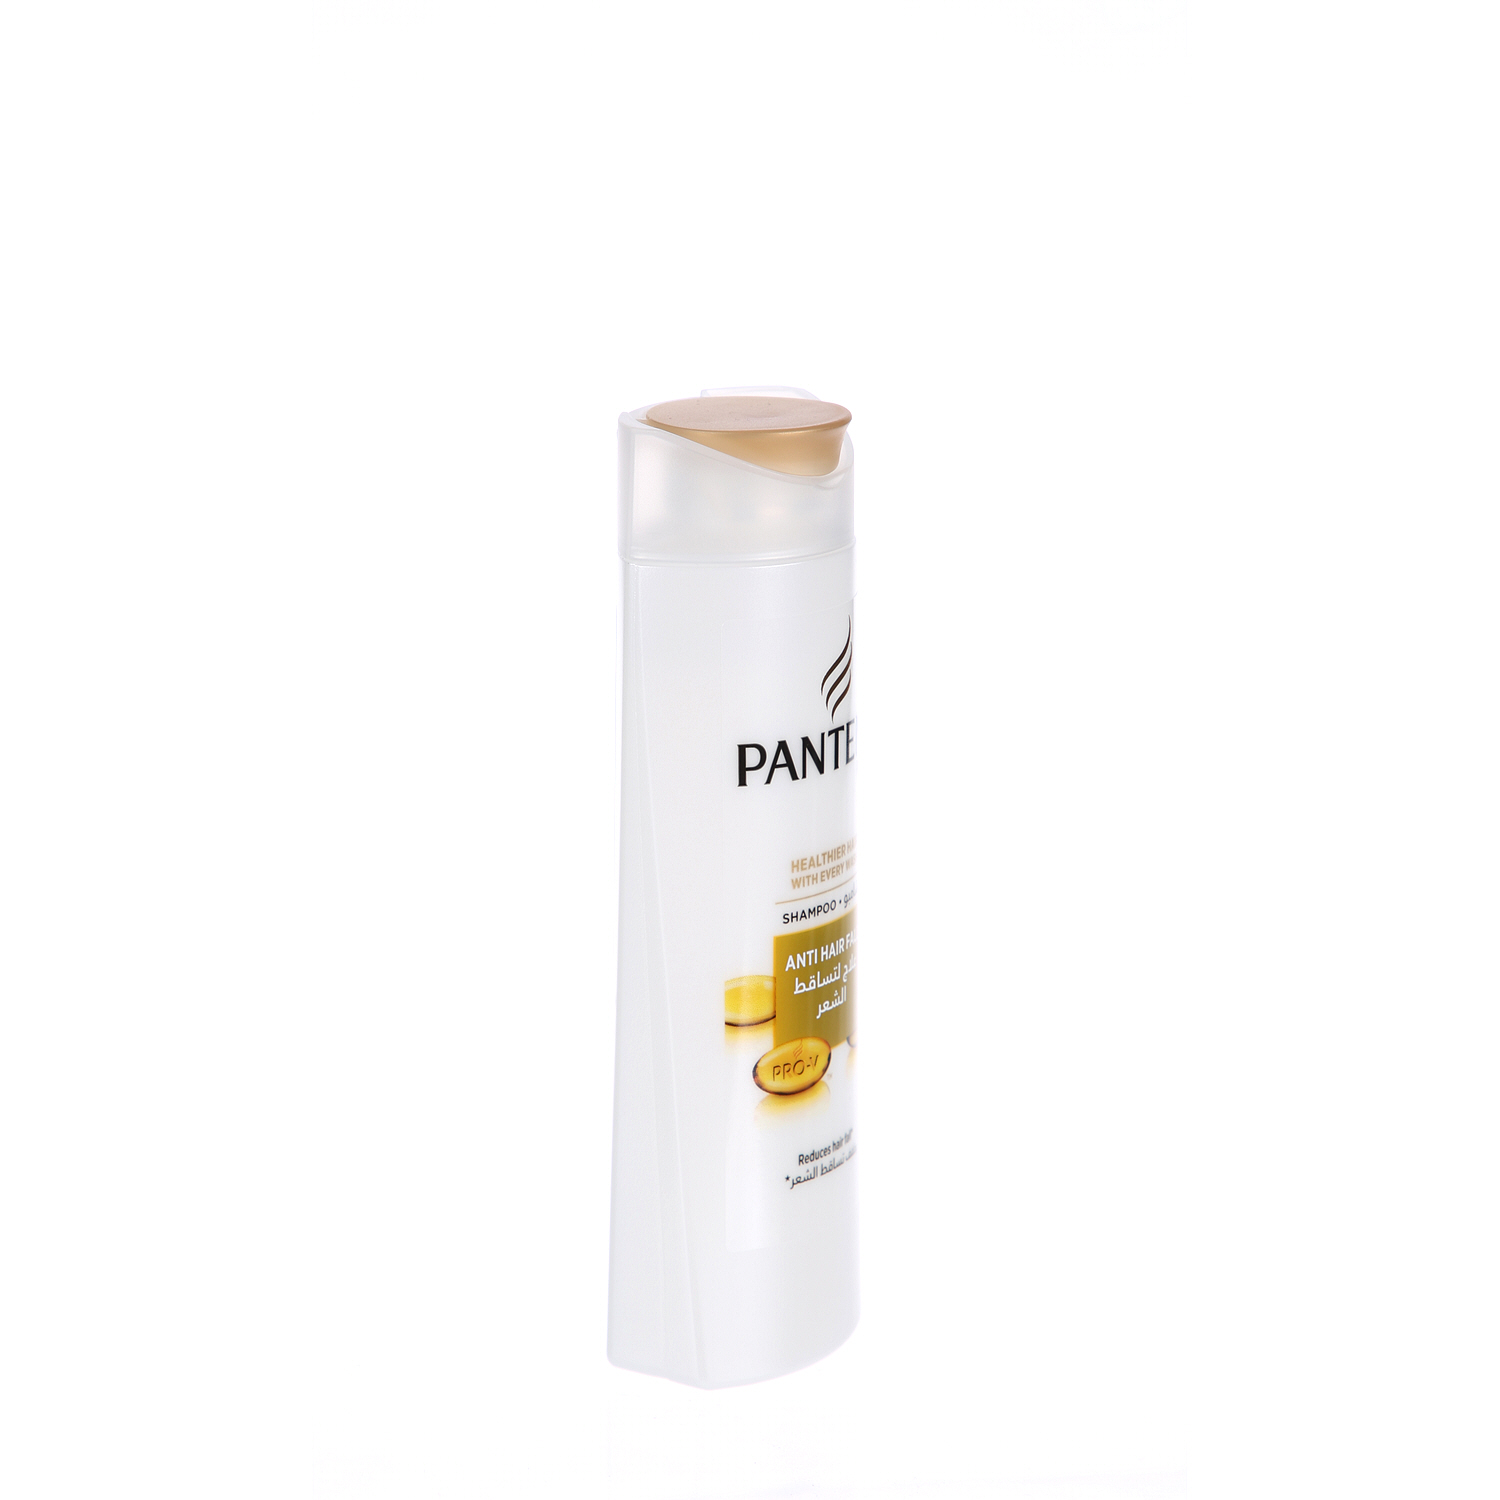 Pantene Shampoo 1In1 Anti Hair Fall 200ml